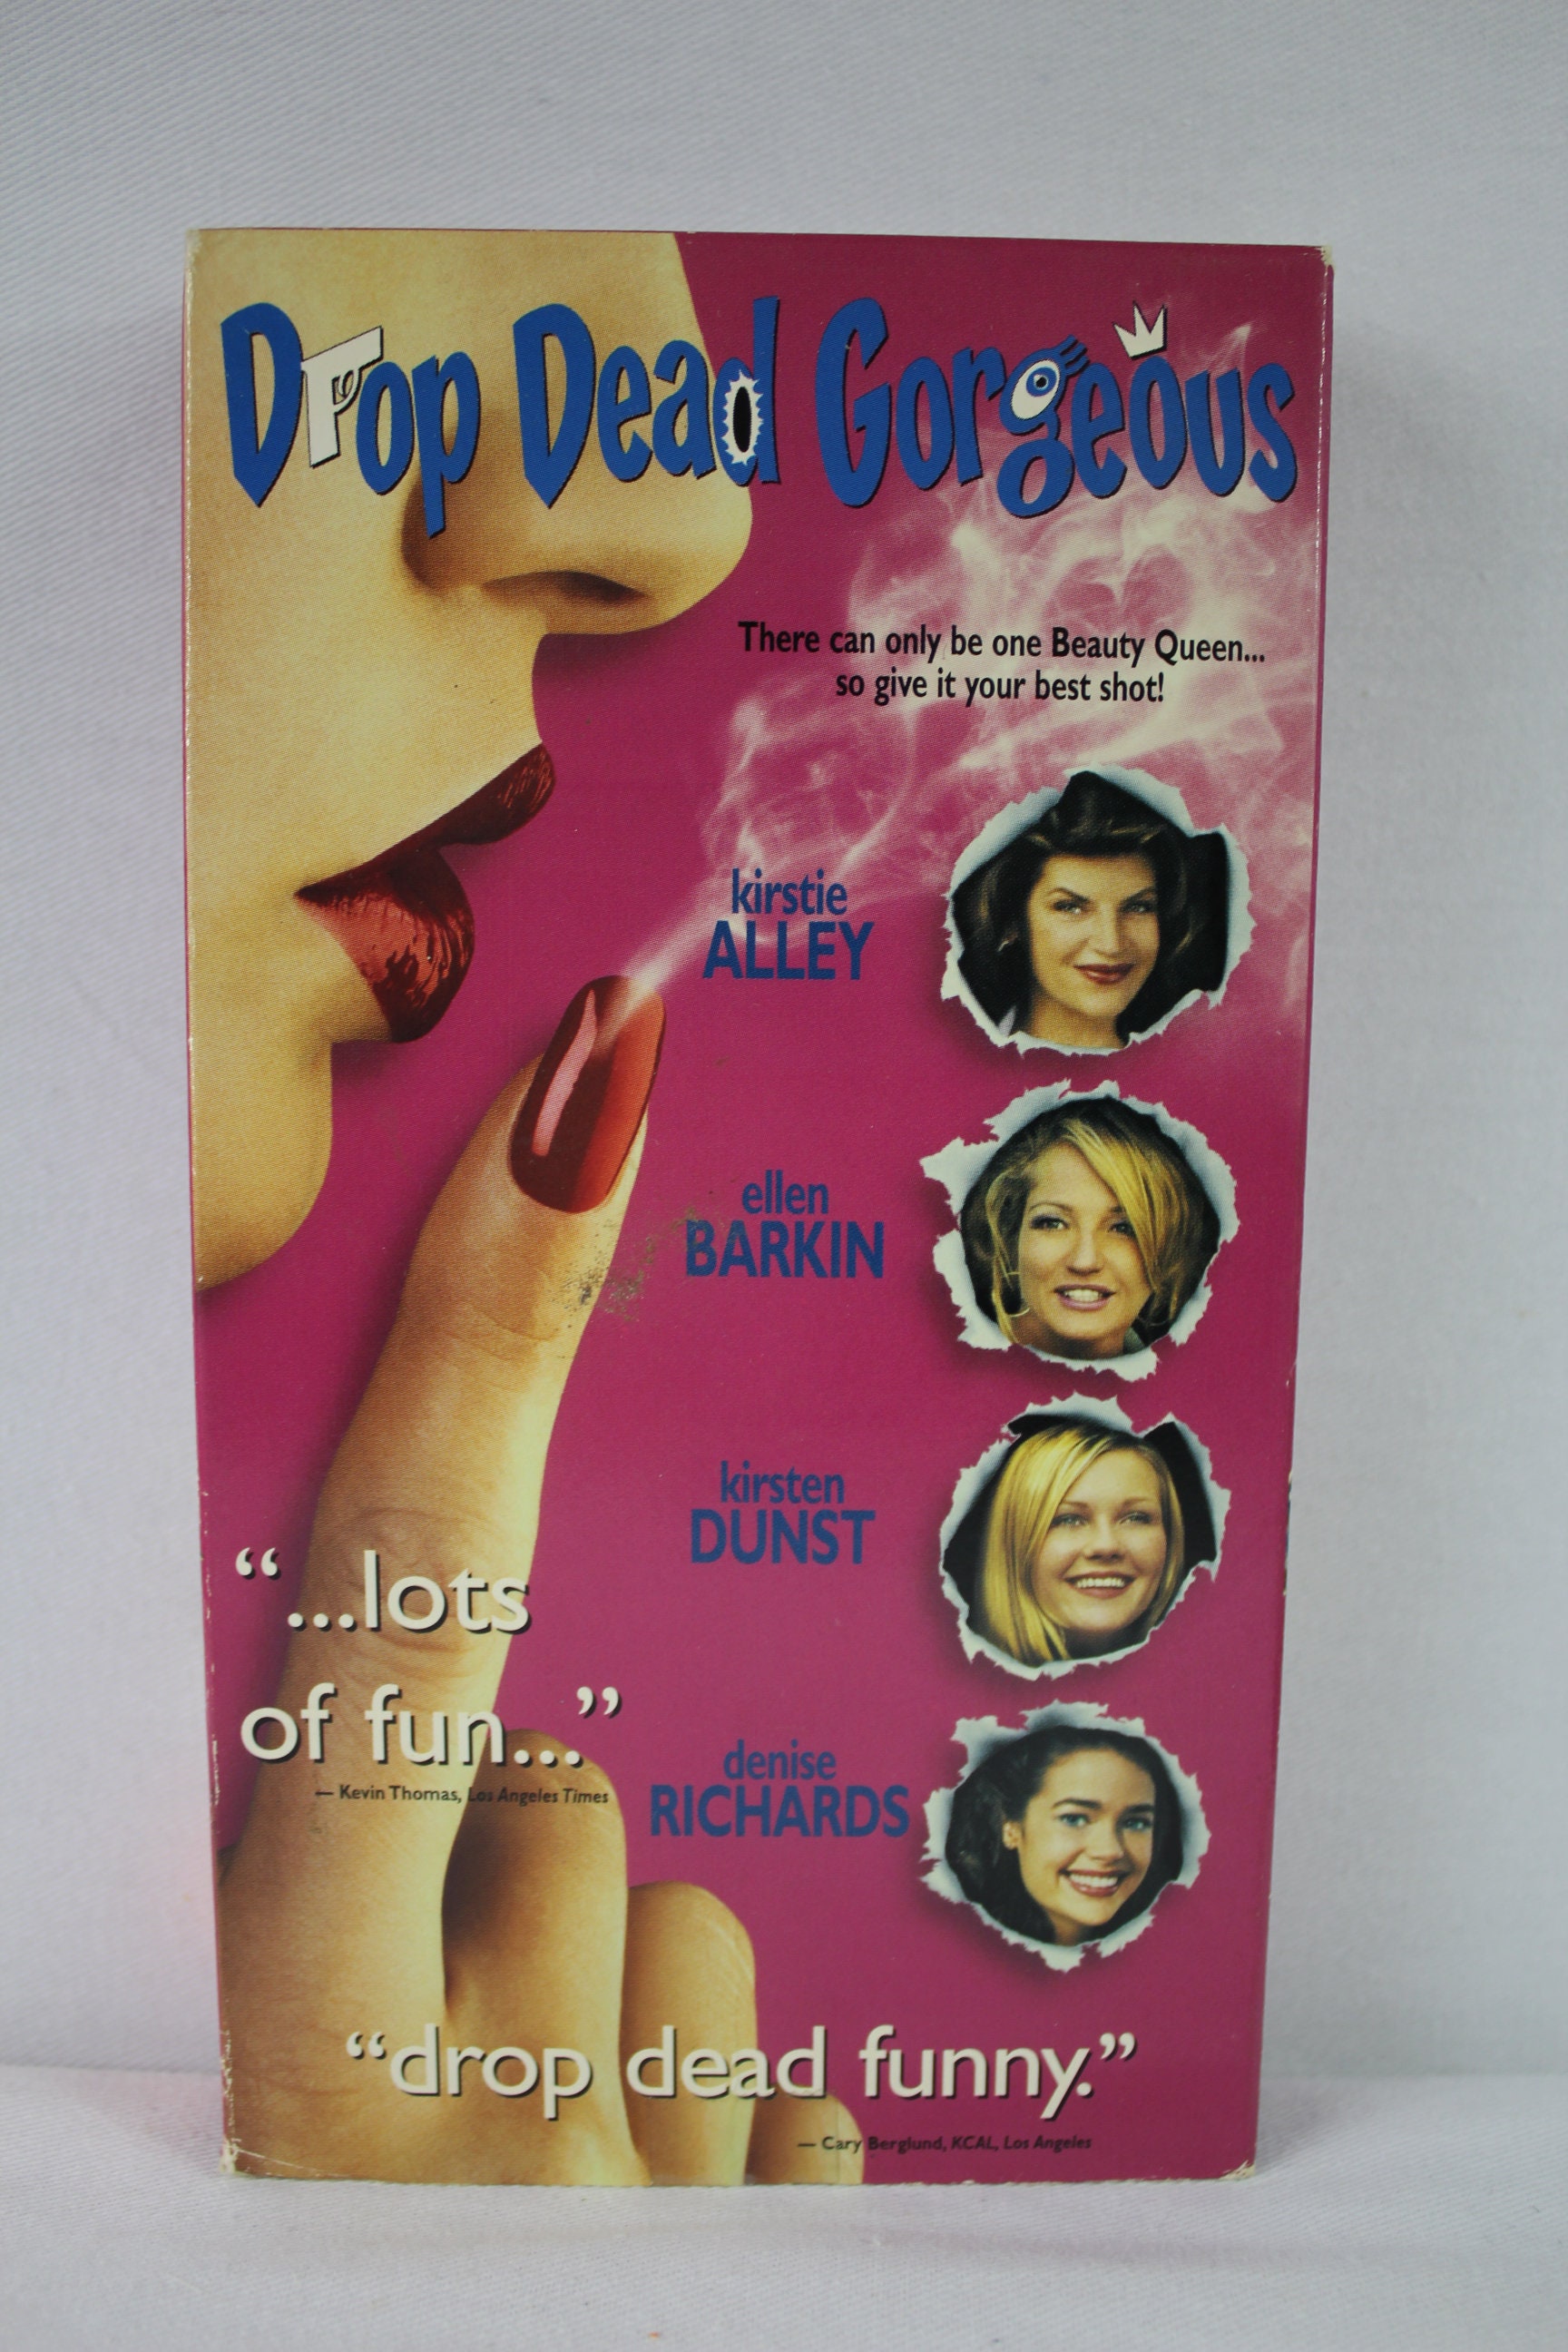 DROP DEAD GORGEOUS, Kristie Alley, Ellen Barkin, Kirsten Dunst, Denise  Richards, Funny, Comedy, 1h38m, 1999, Vhs, 14a, Alliance -  Australia